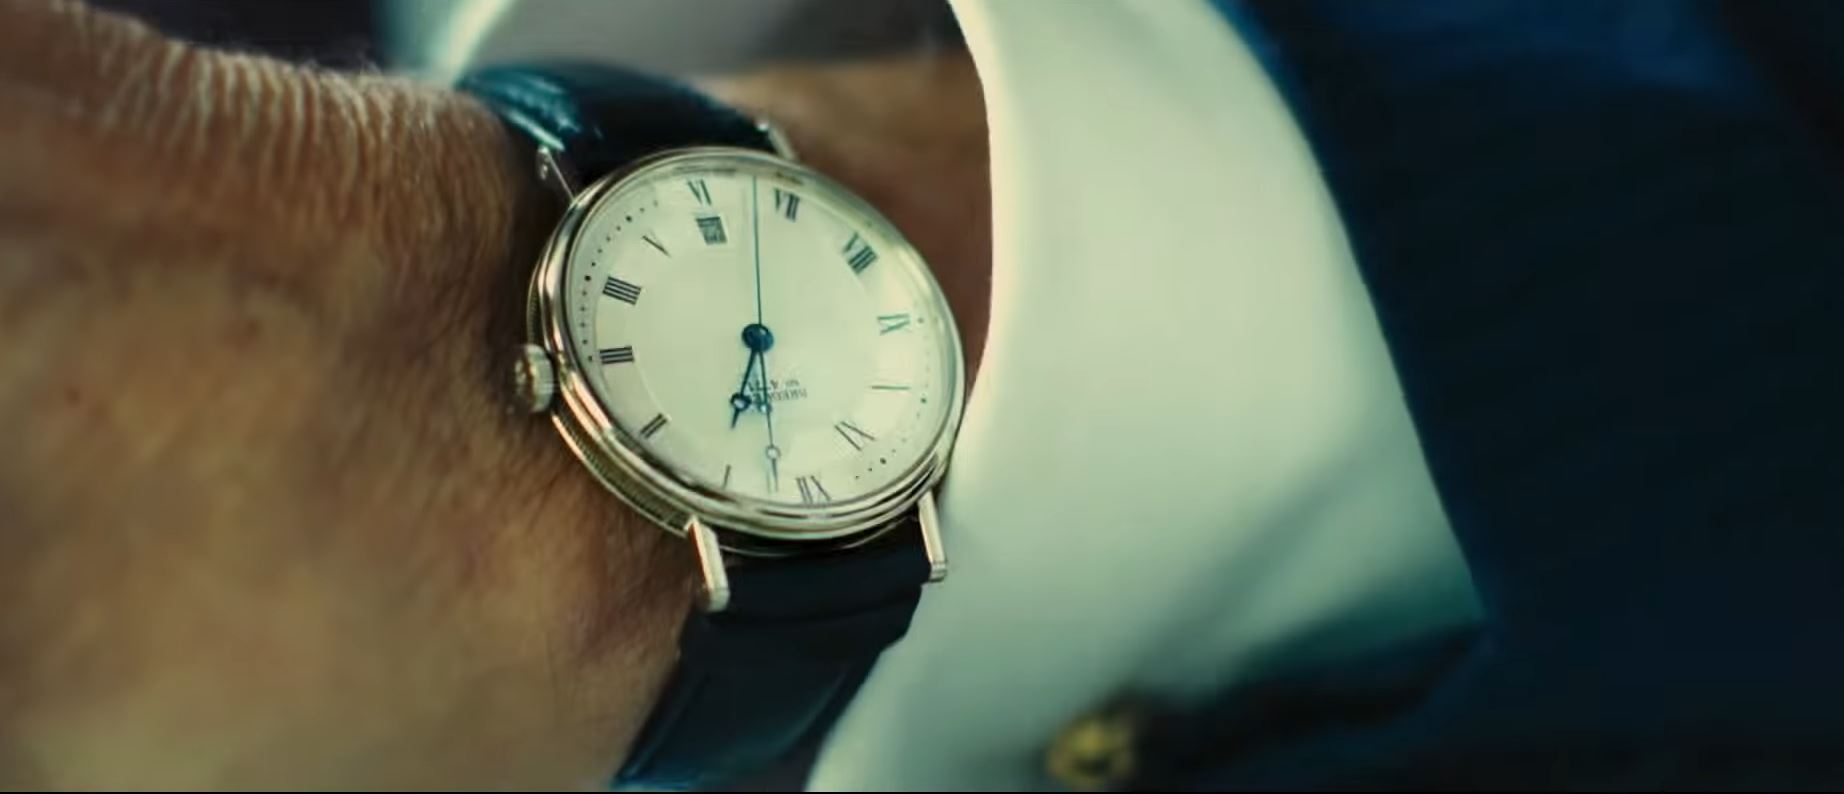 Do you watch the new. Mathey-Tissot часы ирландец.